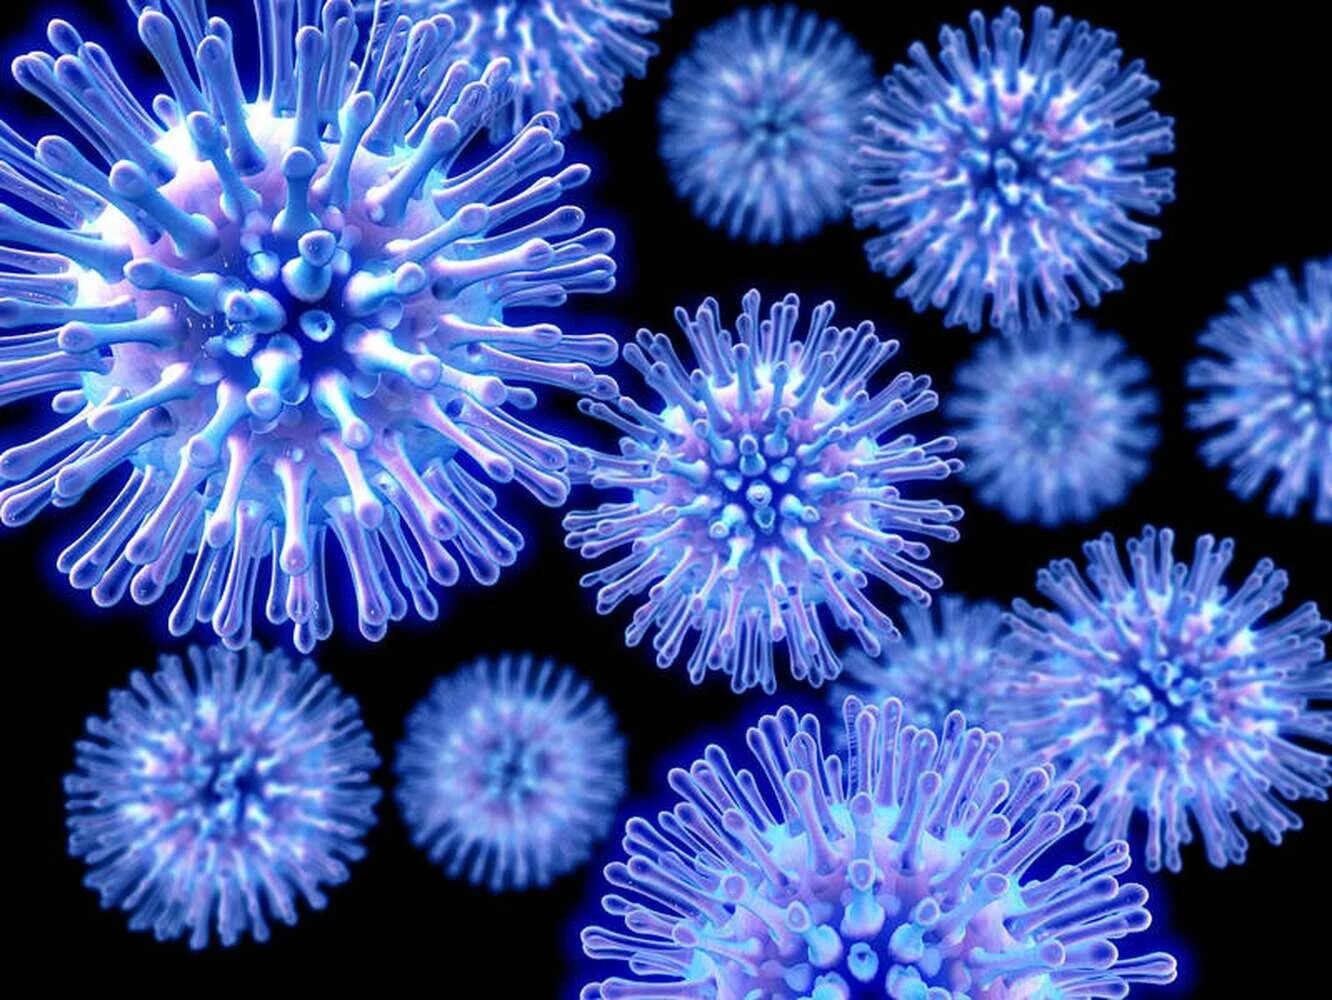 Картинки про вируса. Вирус influenza. Вирус гриппа h1n1. Вирус h1n1 под микроскопом. Вирус гриппа под микроскопом.